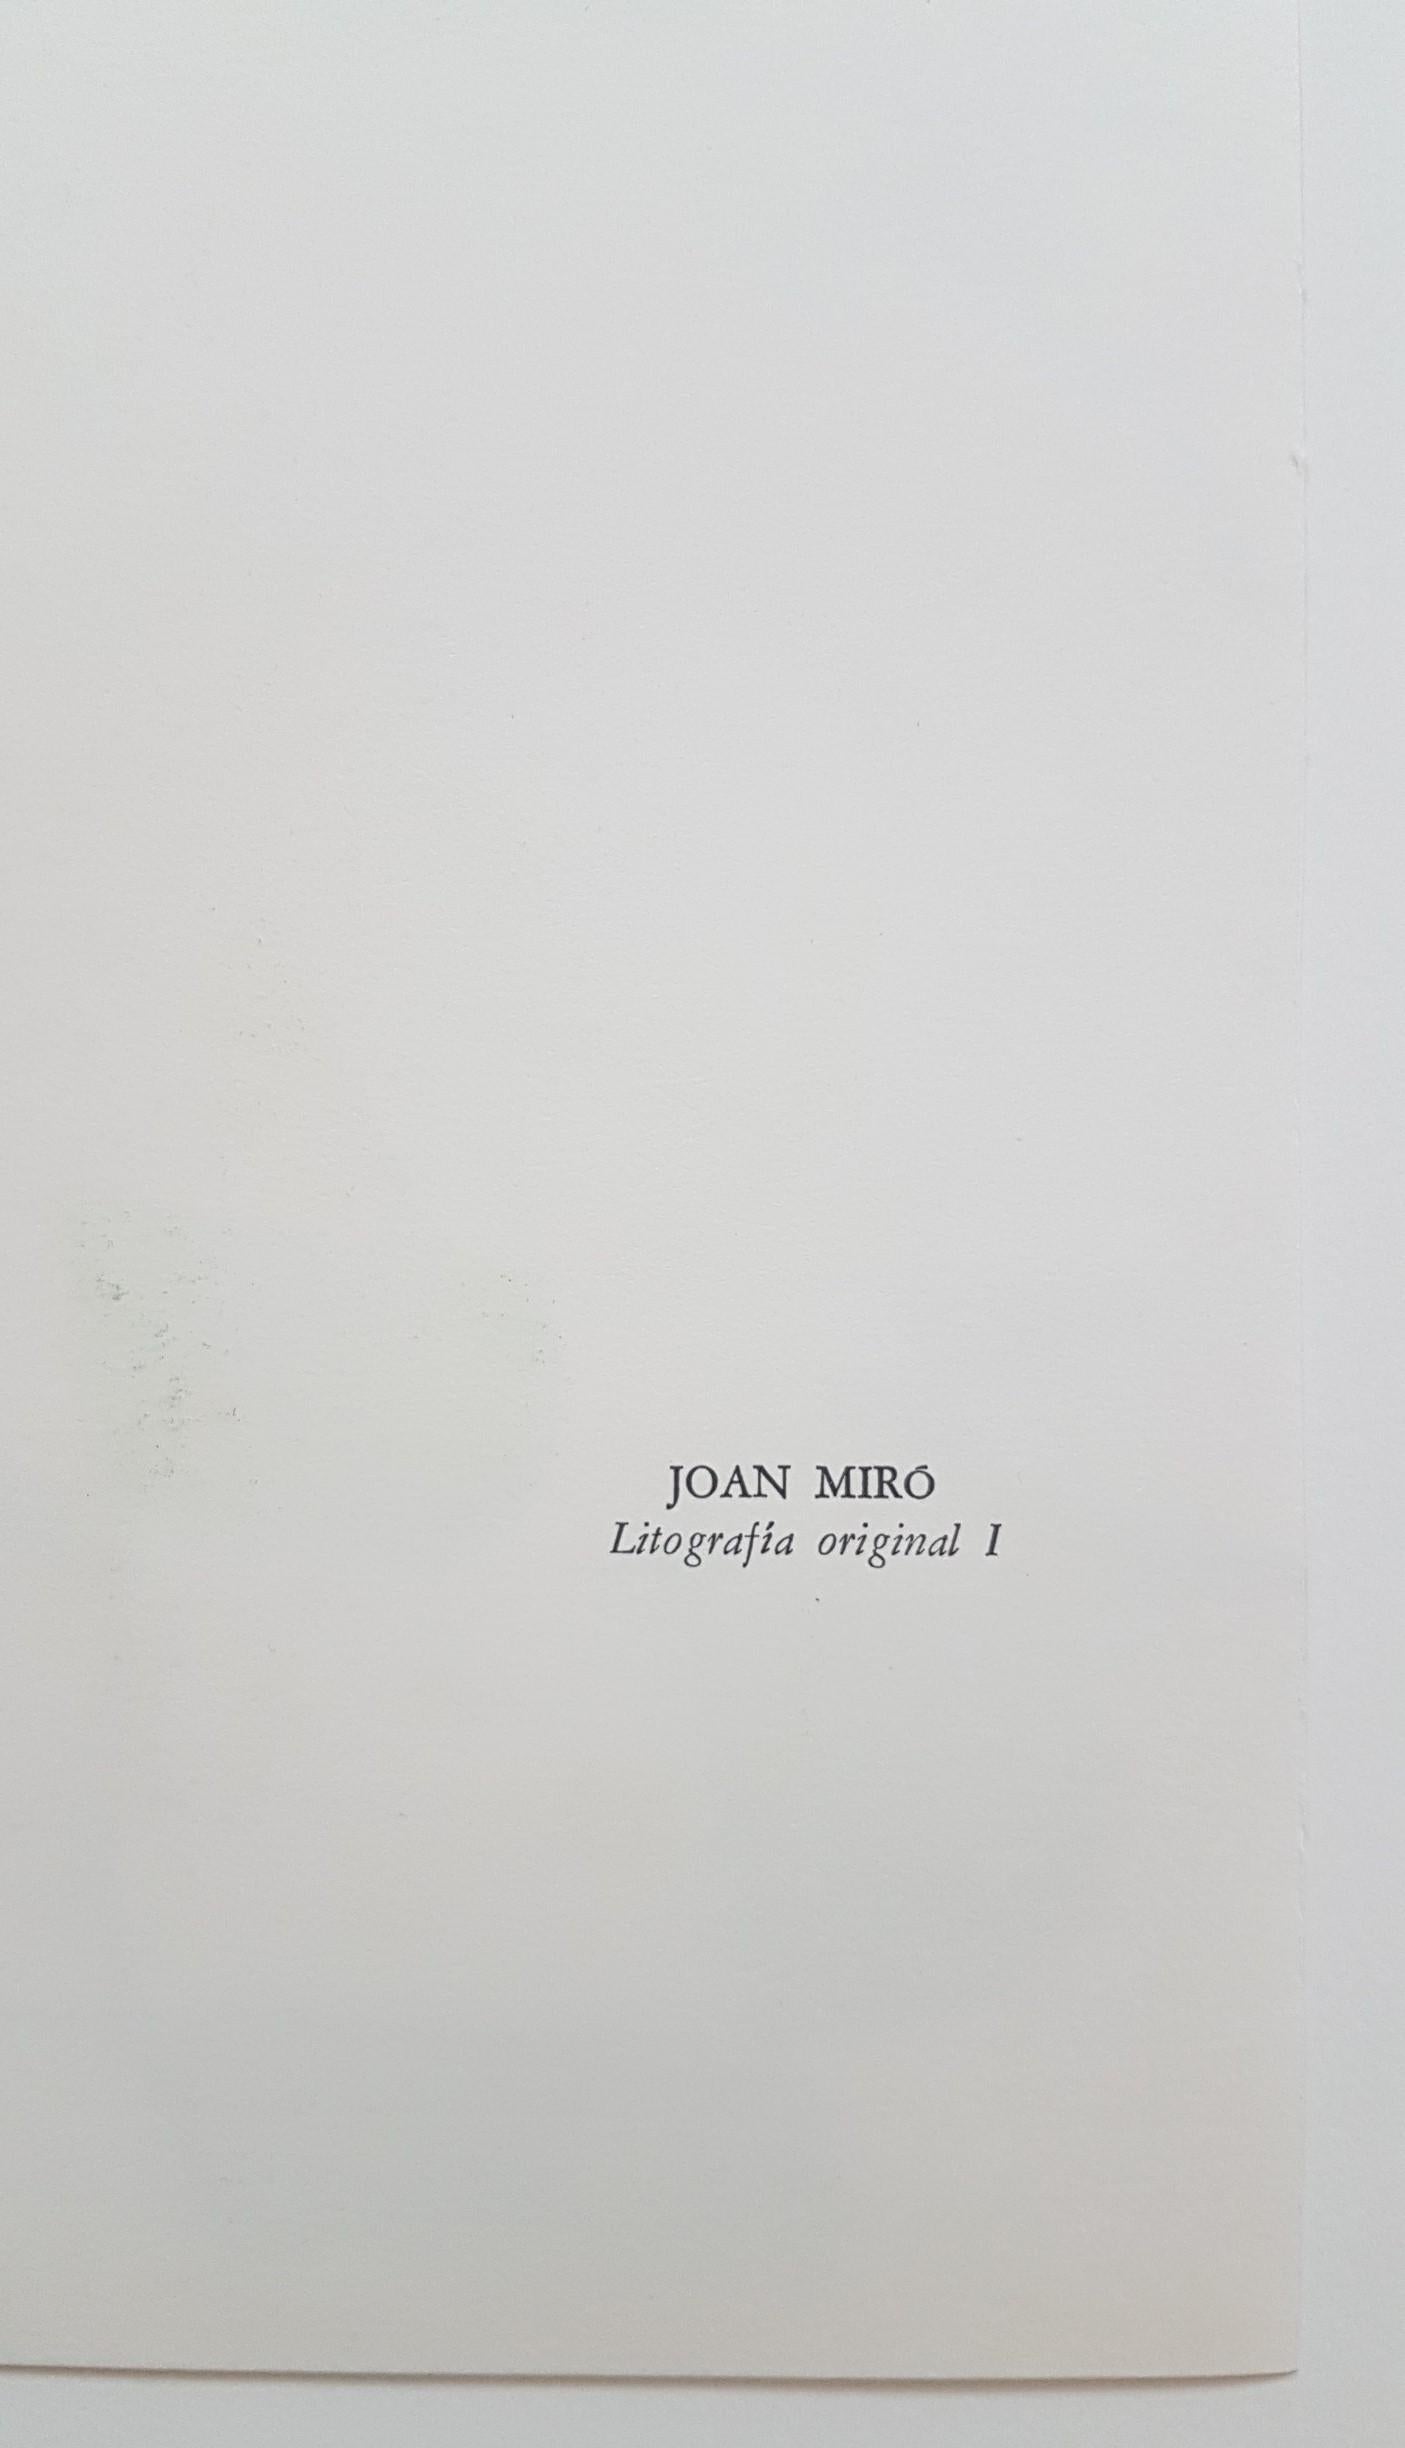 Joan Miró
Litografia Original I
Color Lithograph
Year: 1975
Size: 12.5 × 9.6 inches
Catalogue Raisonné: Queneau, Miro Lithographe II, 1952-1963, p.35
Publisher: Maeght Editeur, Paris, France 
Verso: Typographically annotated: 'Joan Miro - Litografia